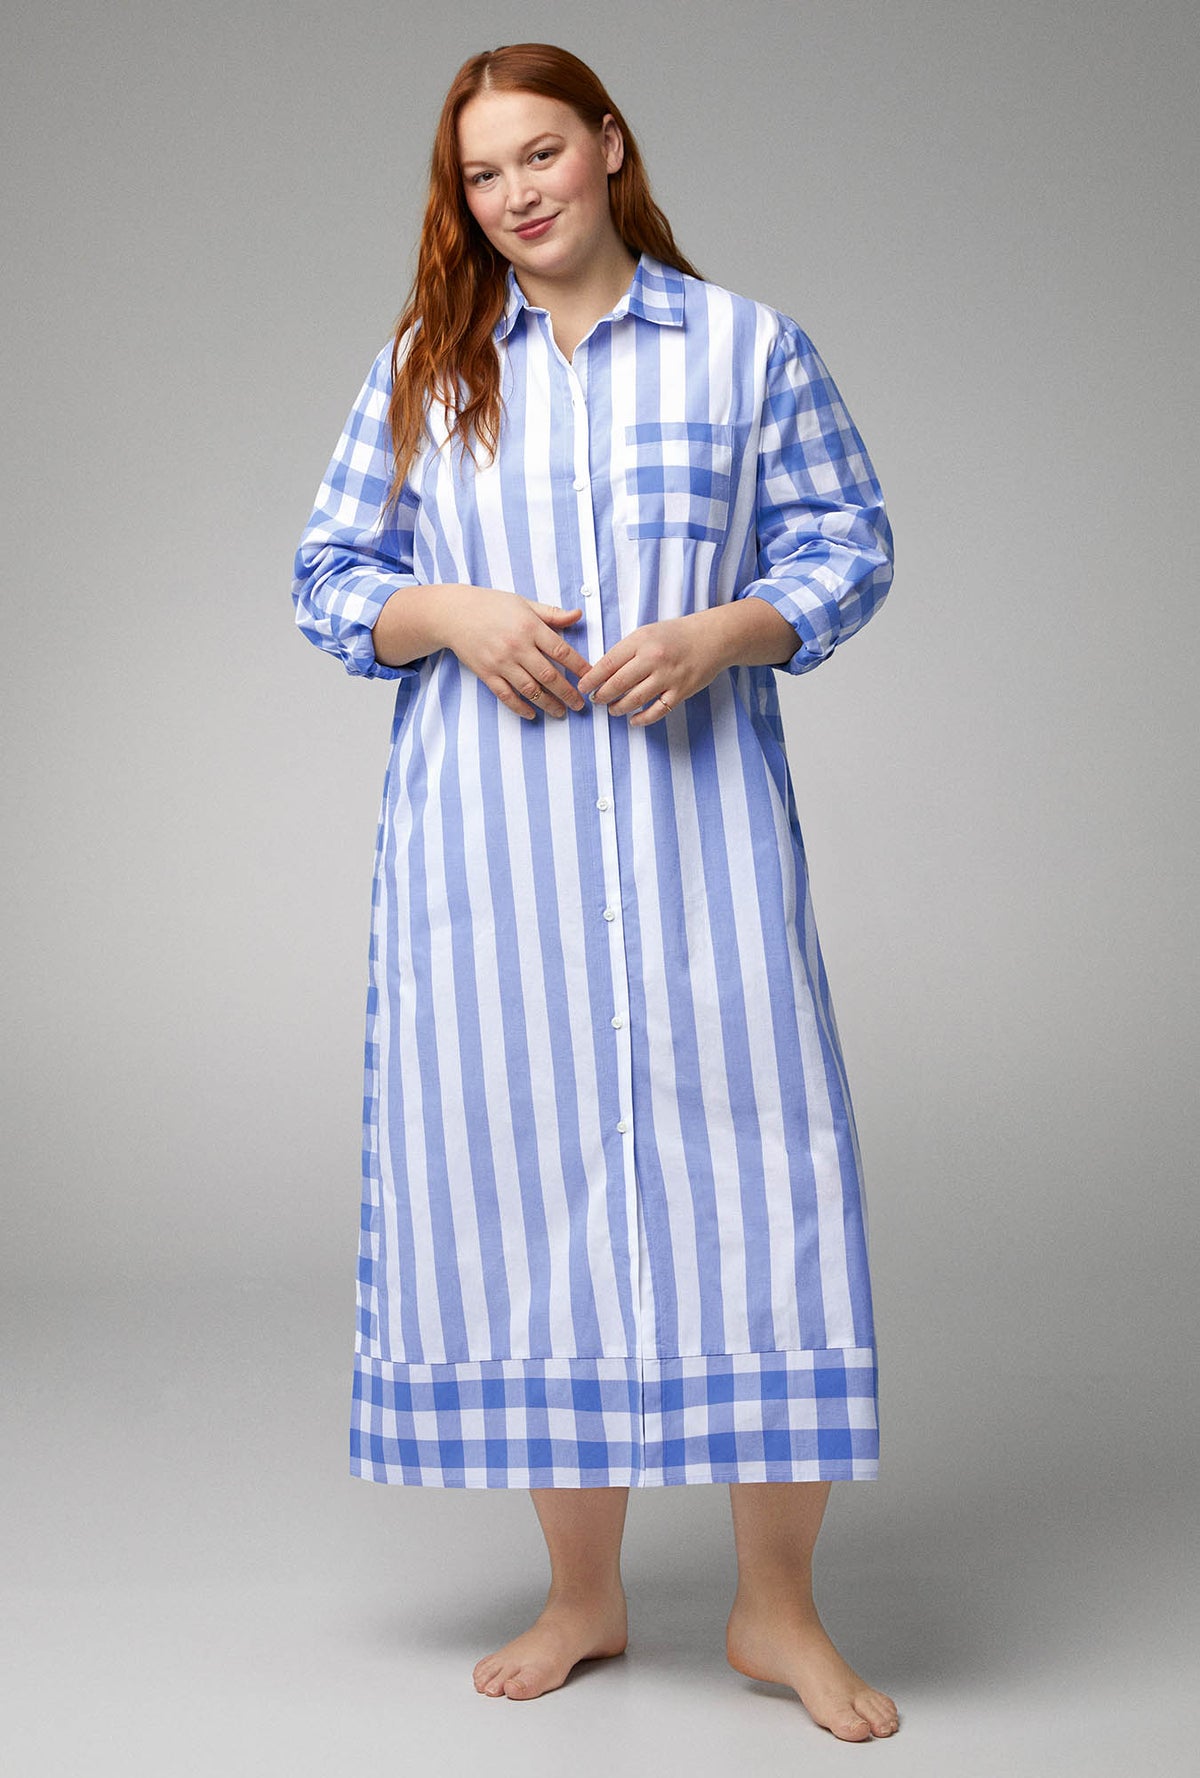 A lady wearing maxi collared cotton poplin sleepshirt with bengal stripe print